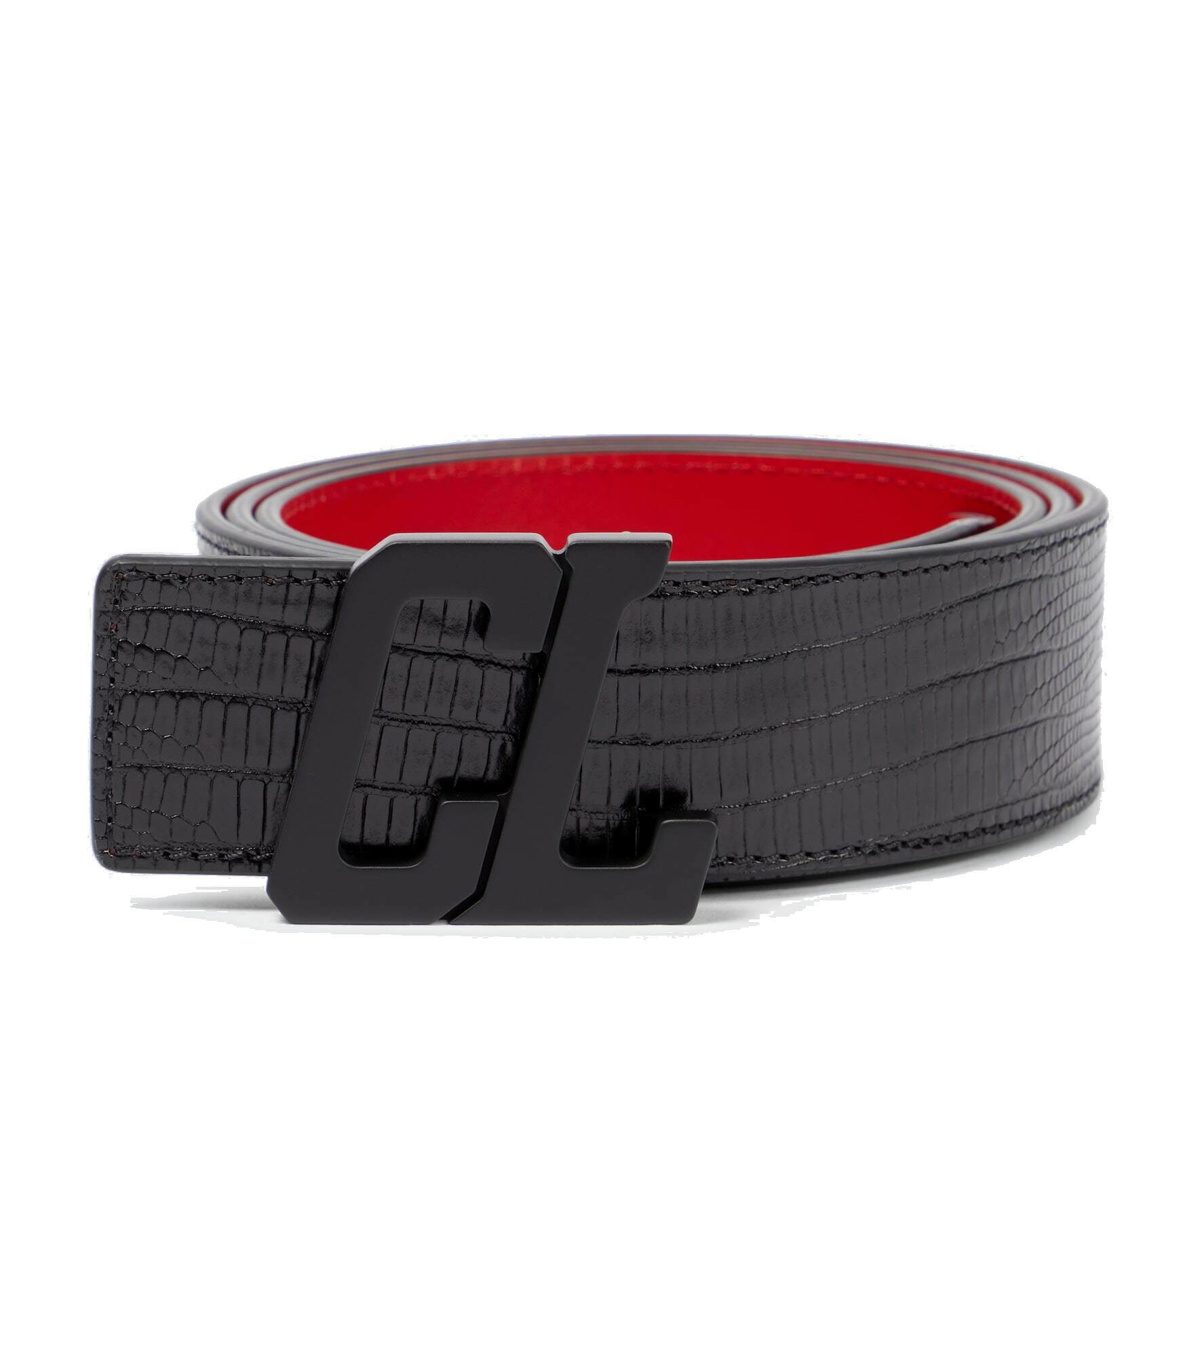 Christian Louboutin - 3.4cm Black Spiked Leather Belt - Black